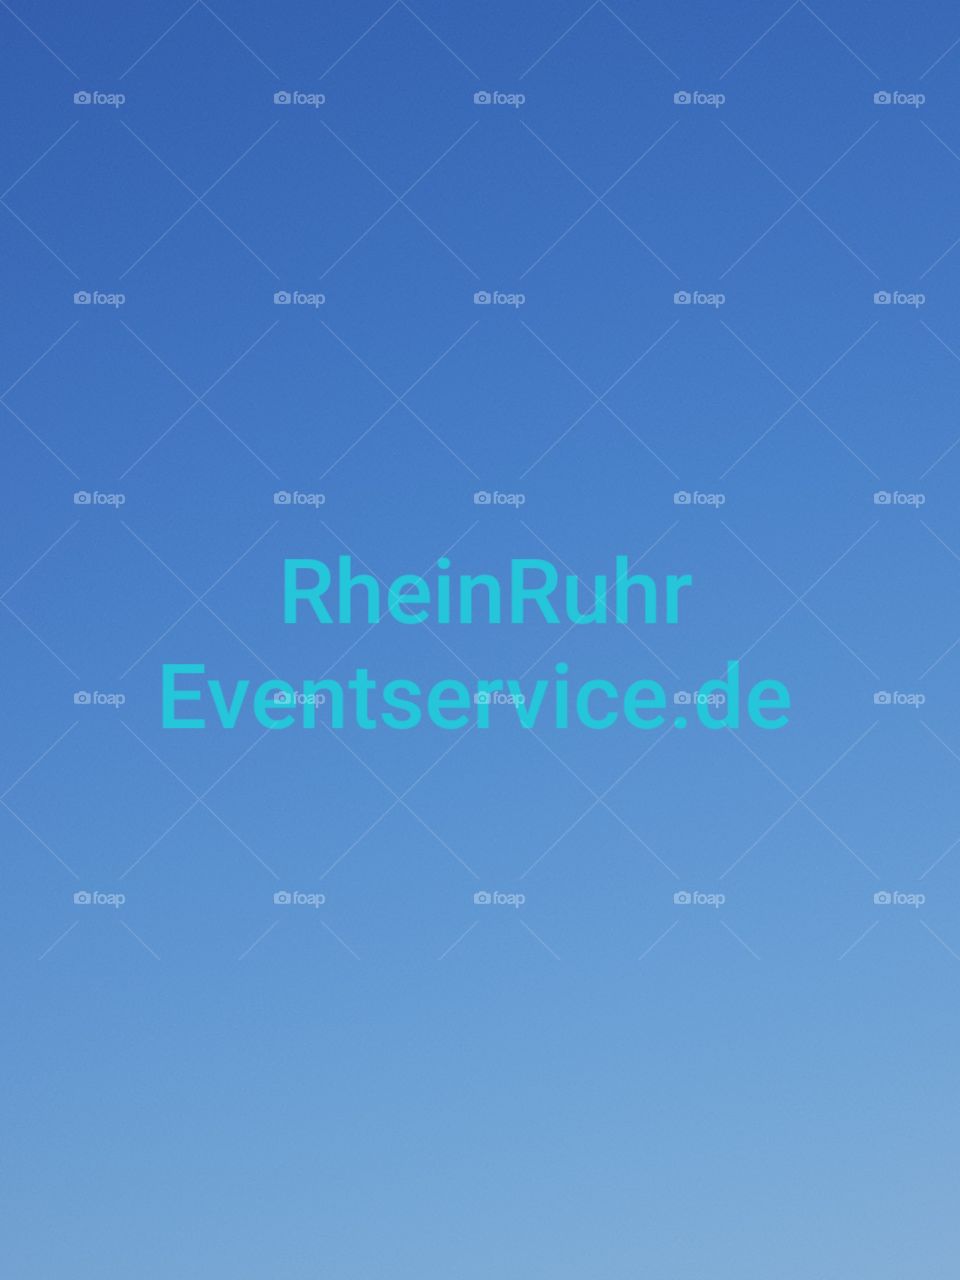 RheinRuhr Eventservice.de